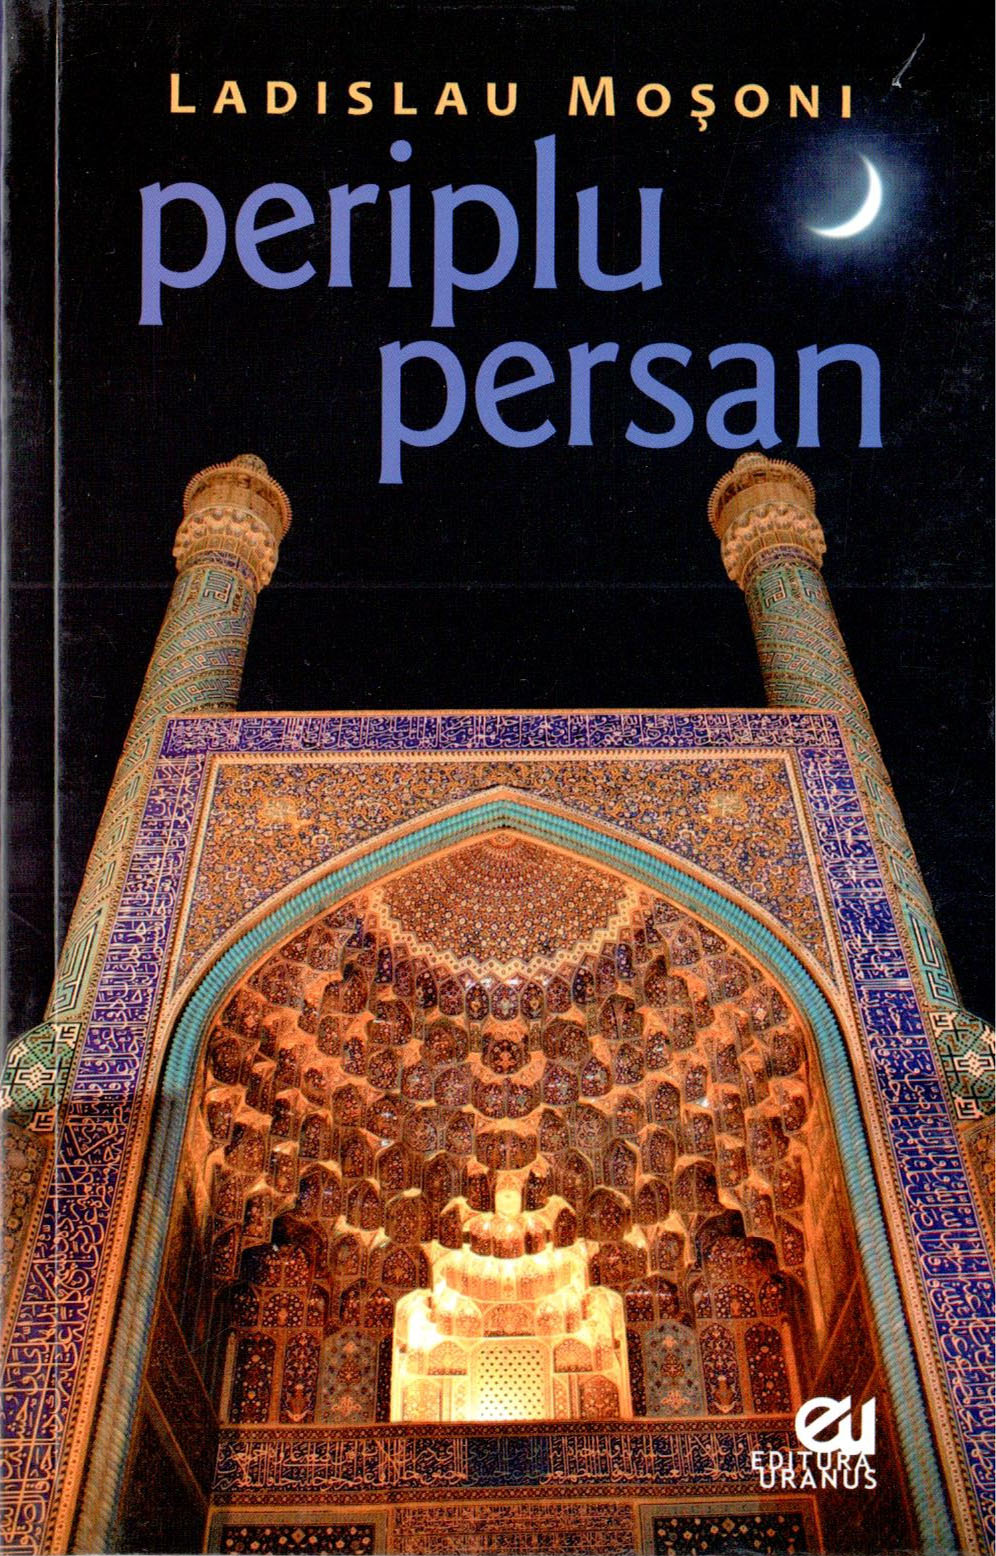 PDF Periplu persan | Ladislau Mosoni carturesti.ro Biografii, memorii, jurnale